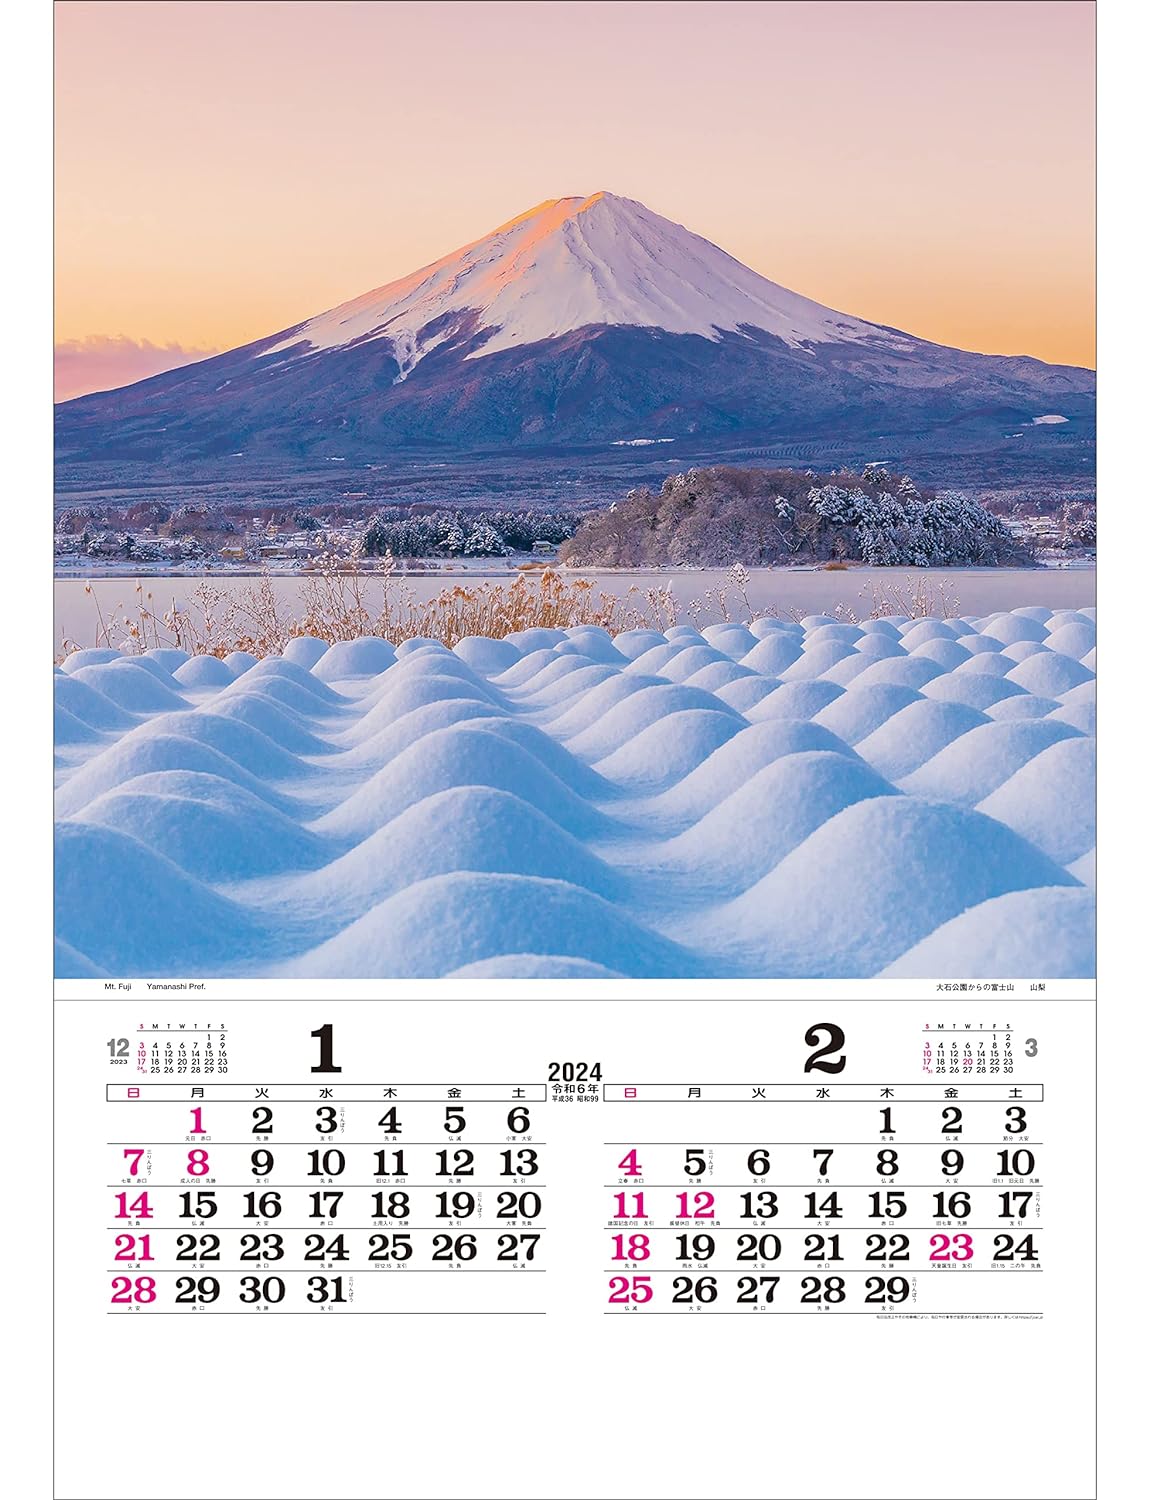 Todan 2024 Calendar Poetical Scenery with Japanese Holidays Tohan DX Film 75 x 50.4cm TD-502